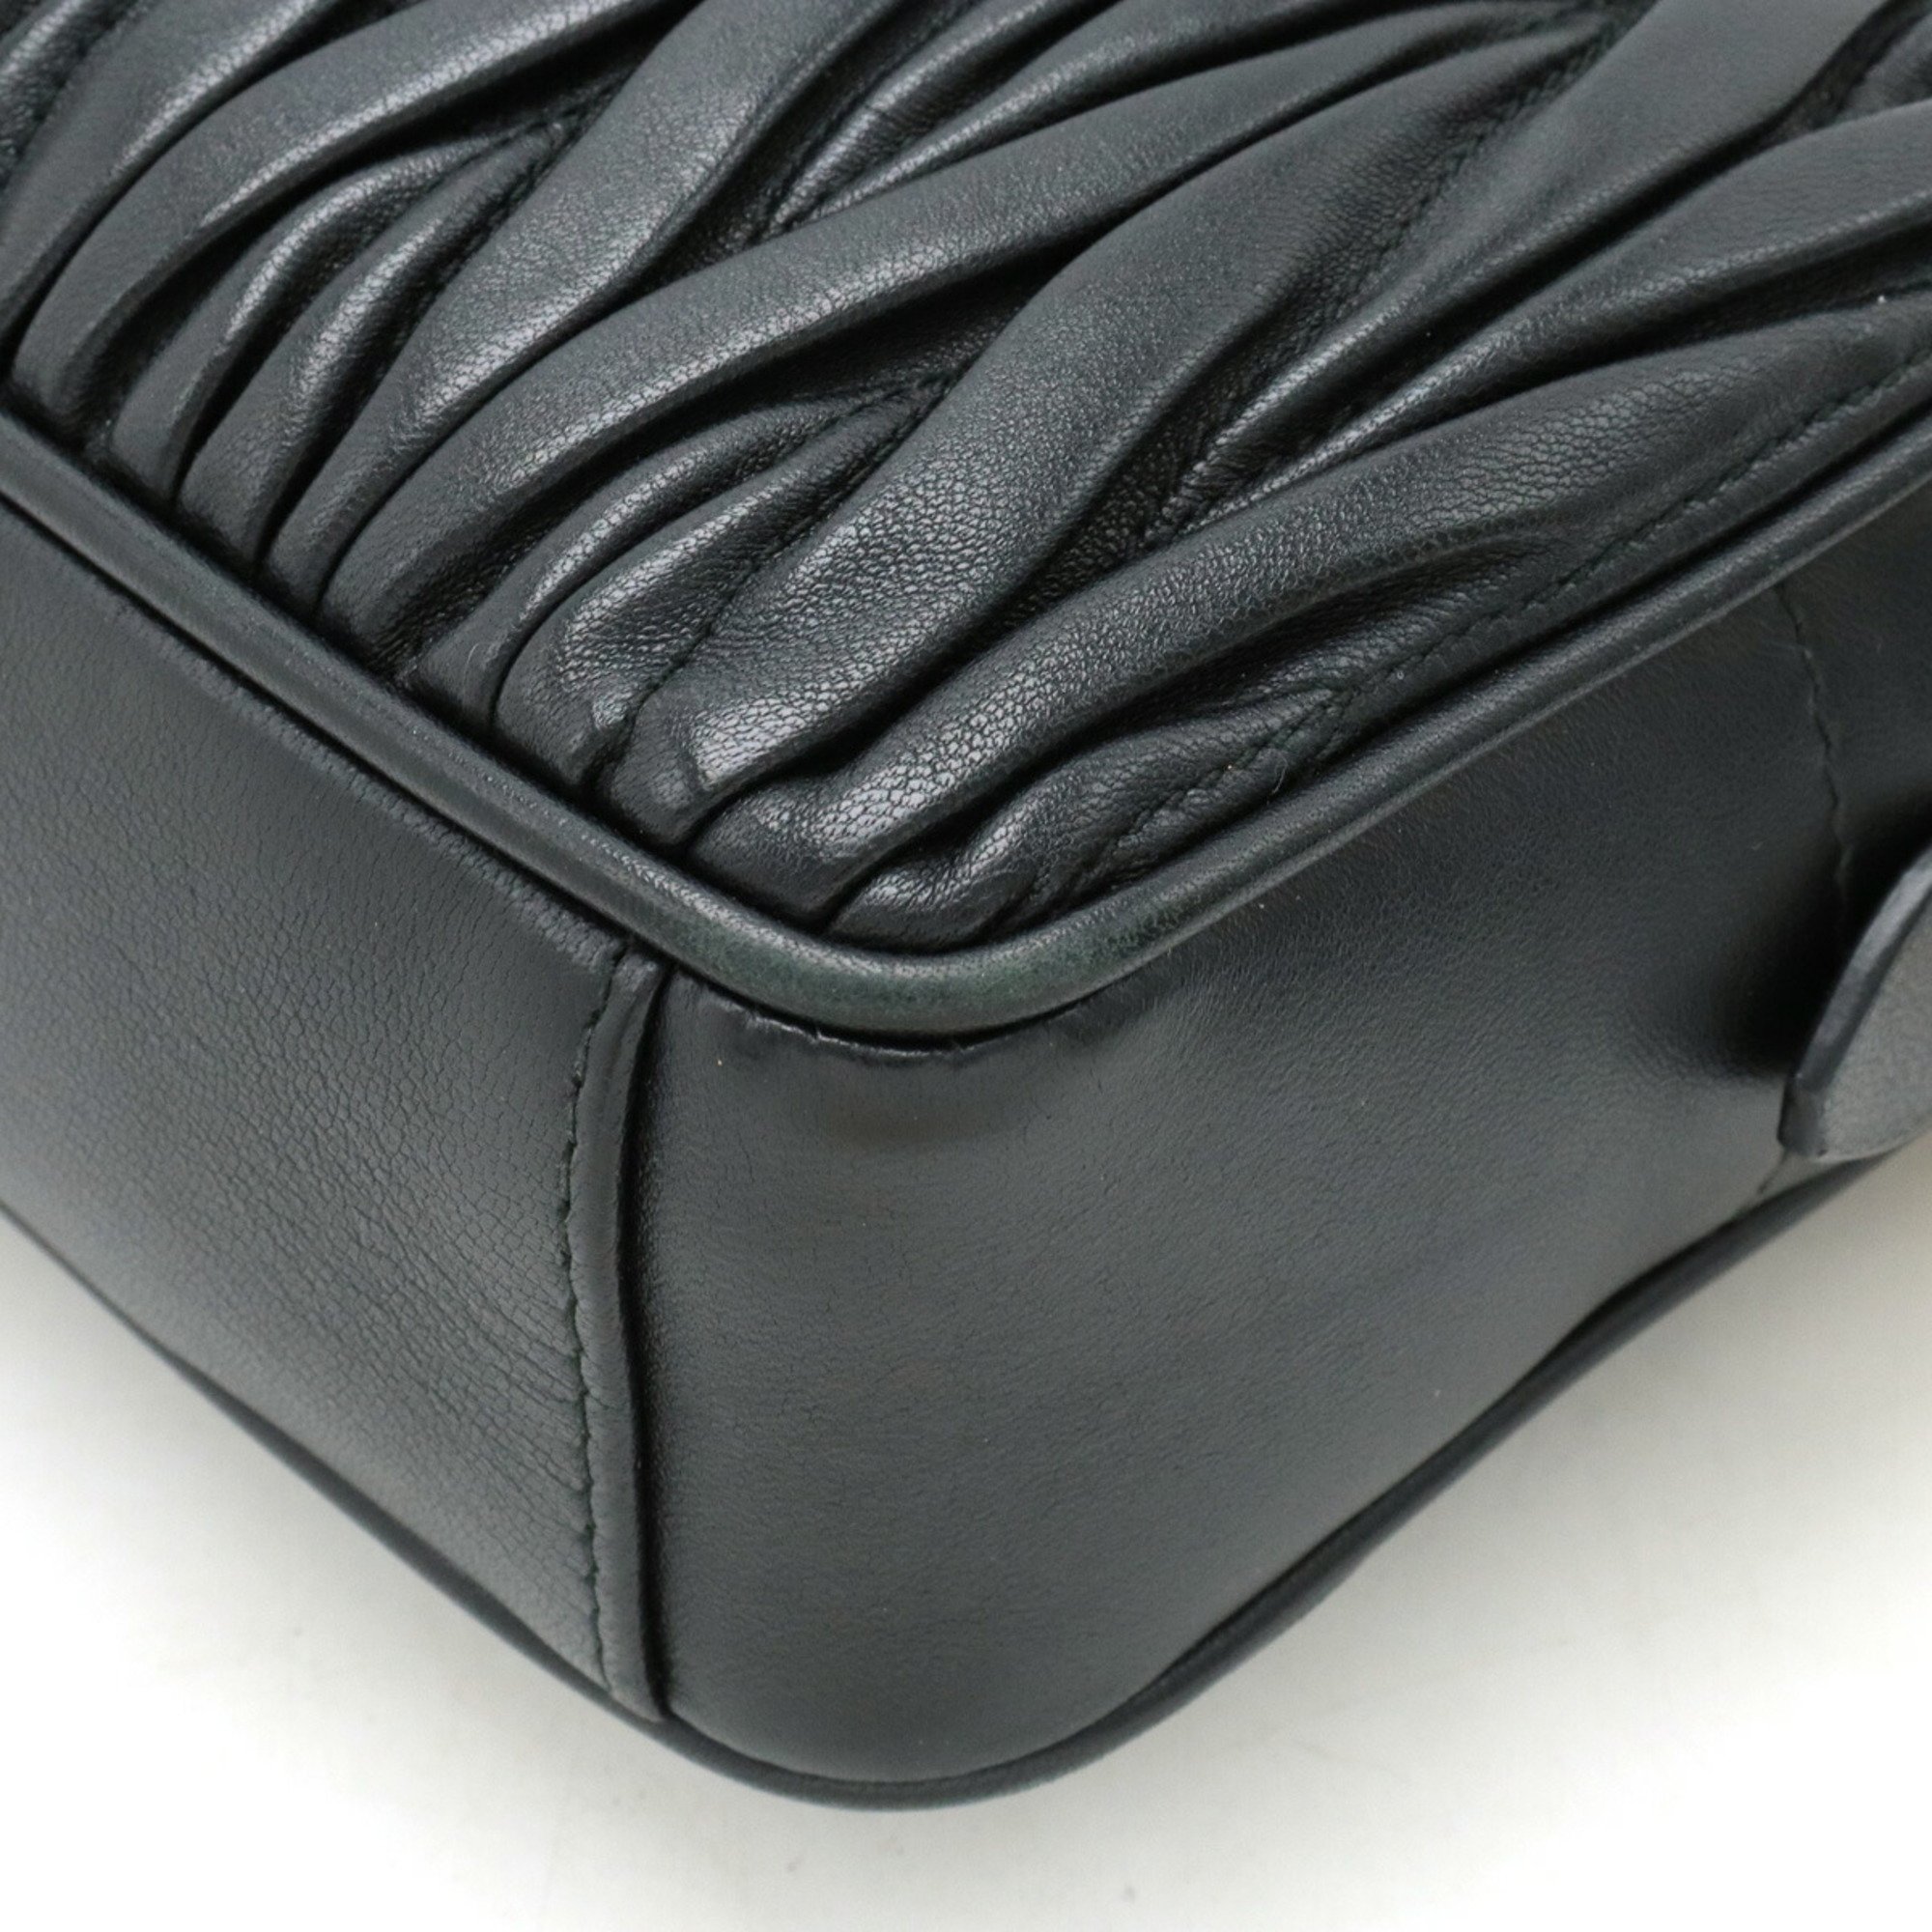 Miu Miu Miu Matelasse Shoulder Bag Chain Clutch Leather Black Purchased at a Japanese Boutique 5BH118